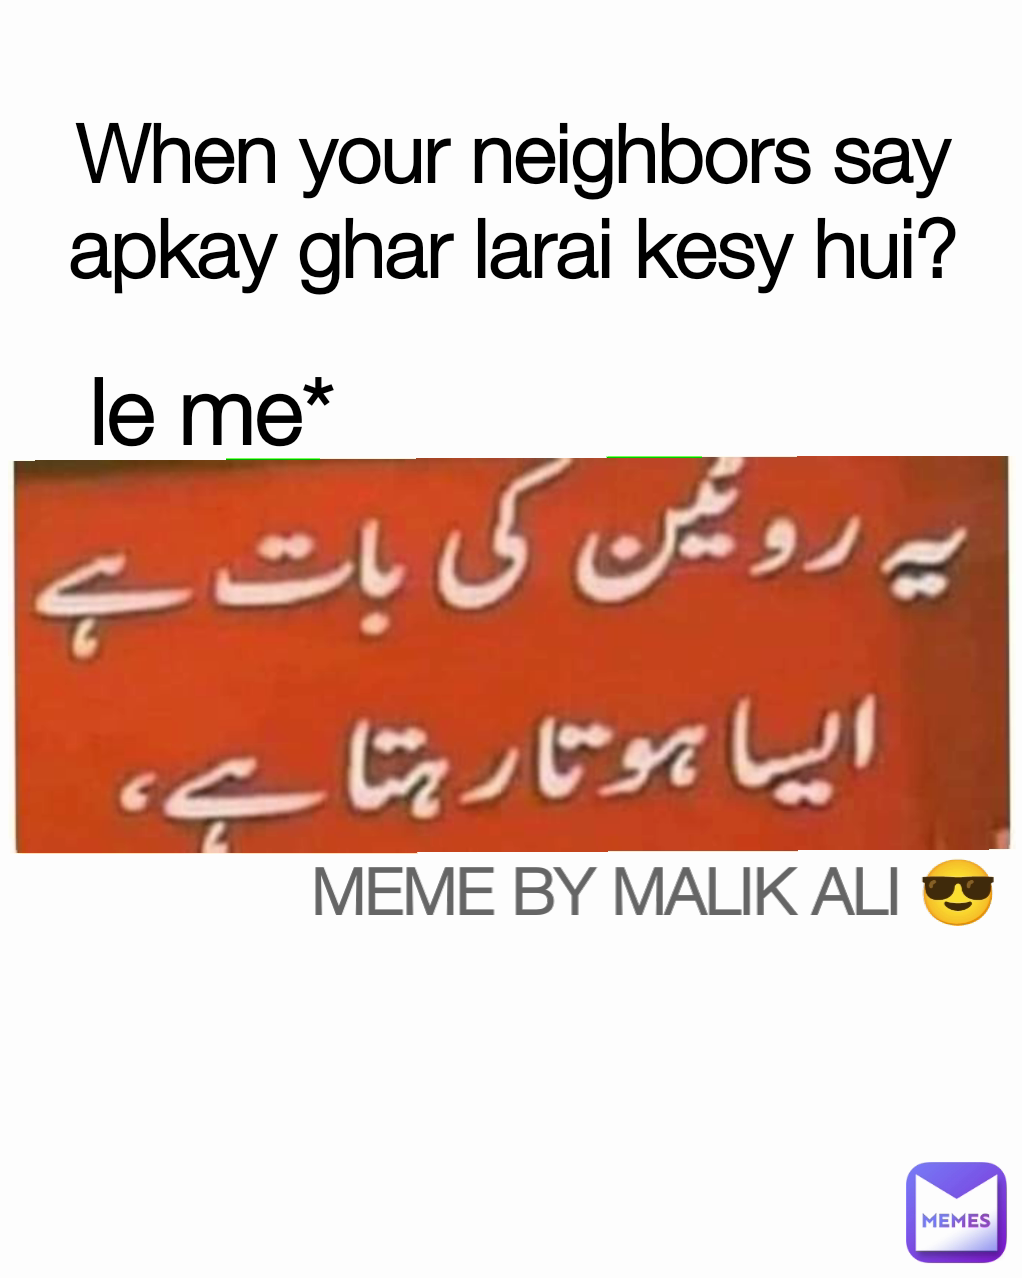 le me* MEME BY MALIK ALI 😎 When your neighbors say apkay ghar larai kesy hui?